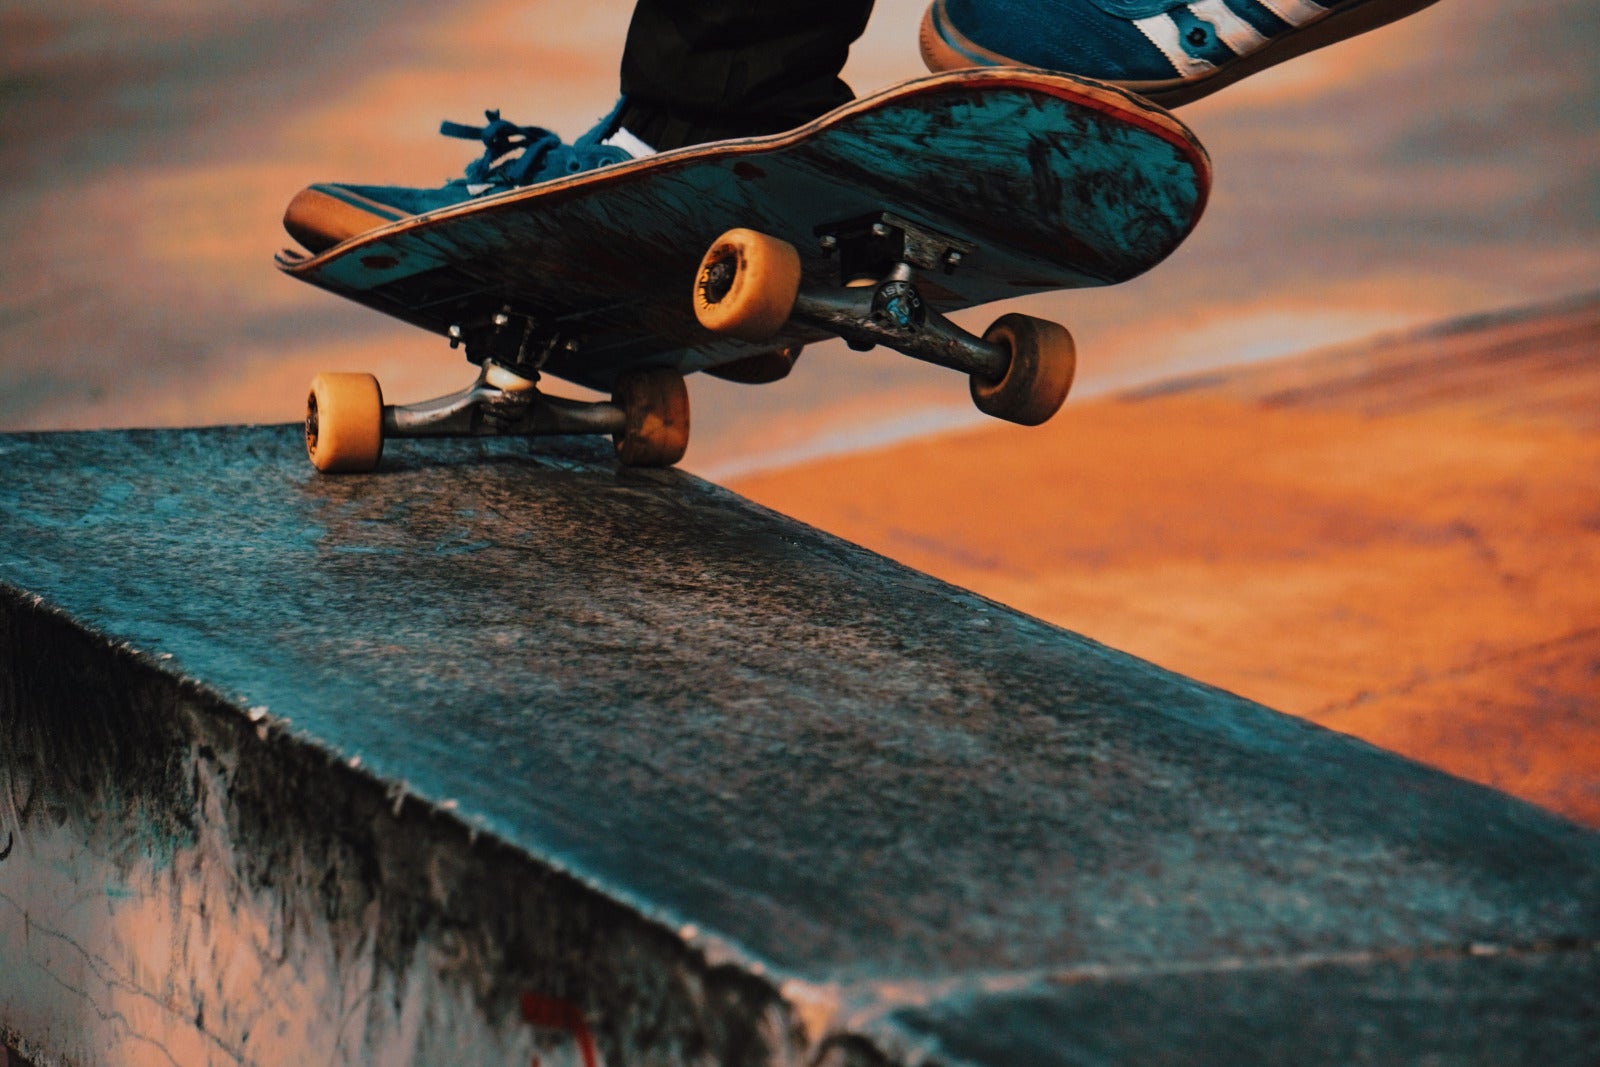 Skateboard Trick On Ledge